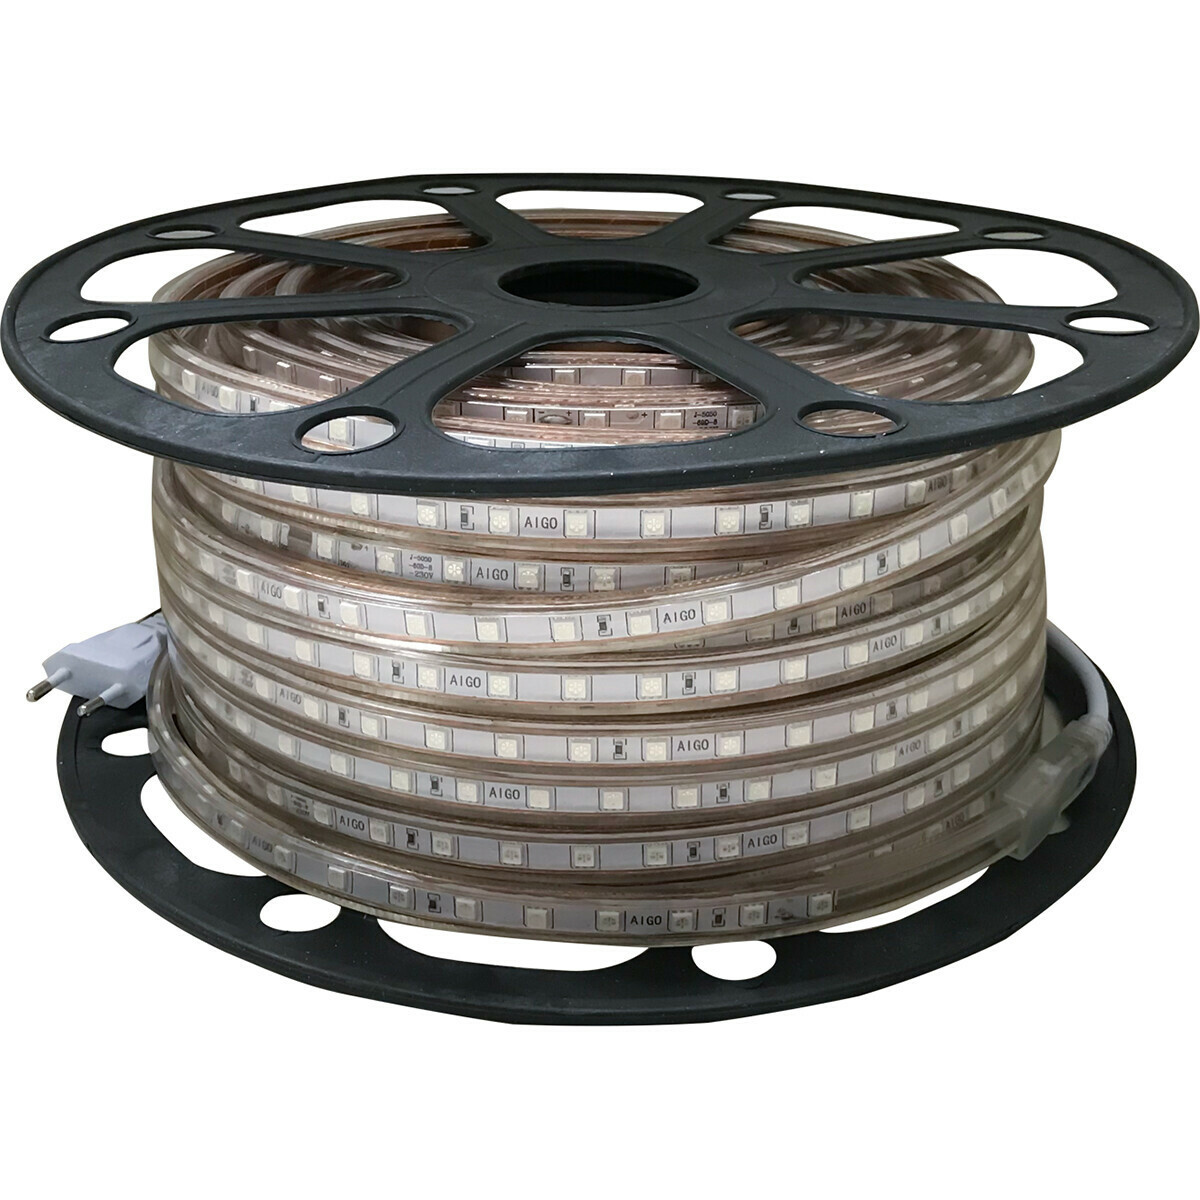 LED Strip - Aigi Strabo - 50 Meter - Dimmbar - IP65 Wasserdicht